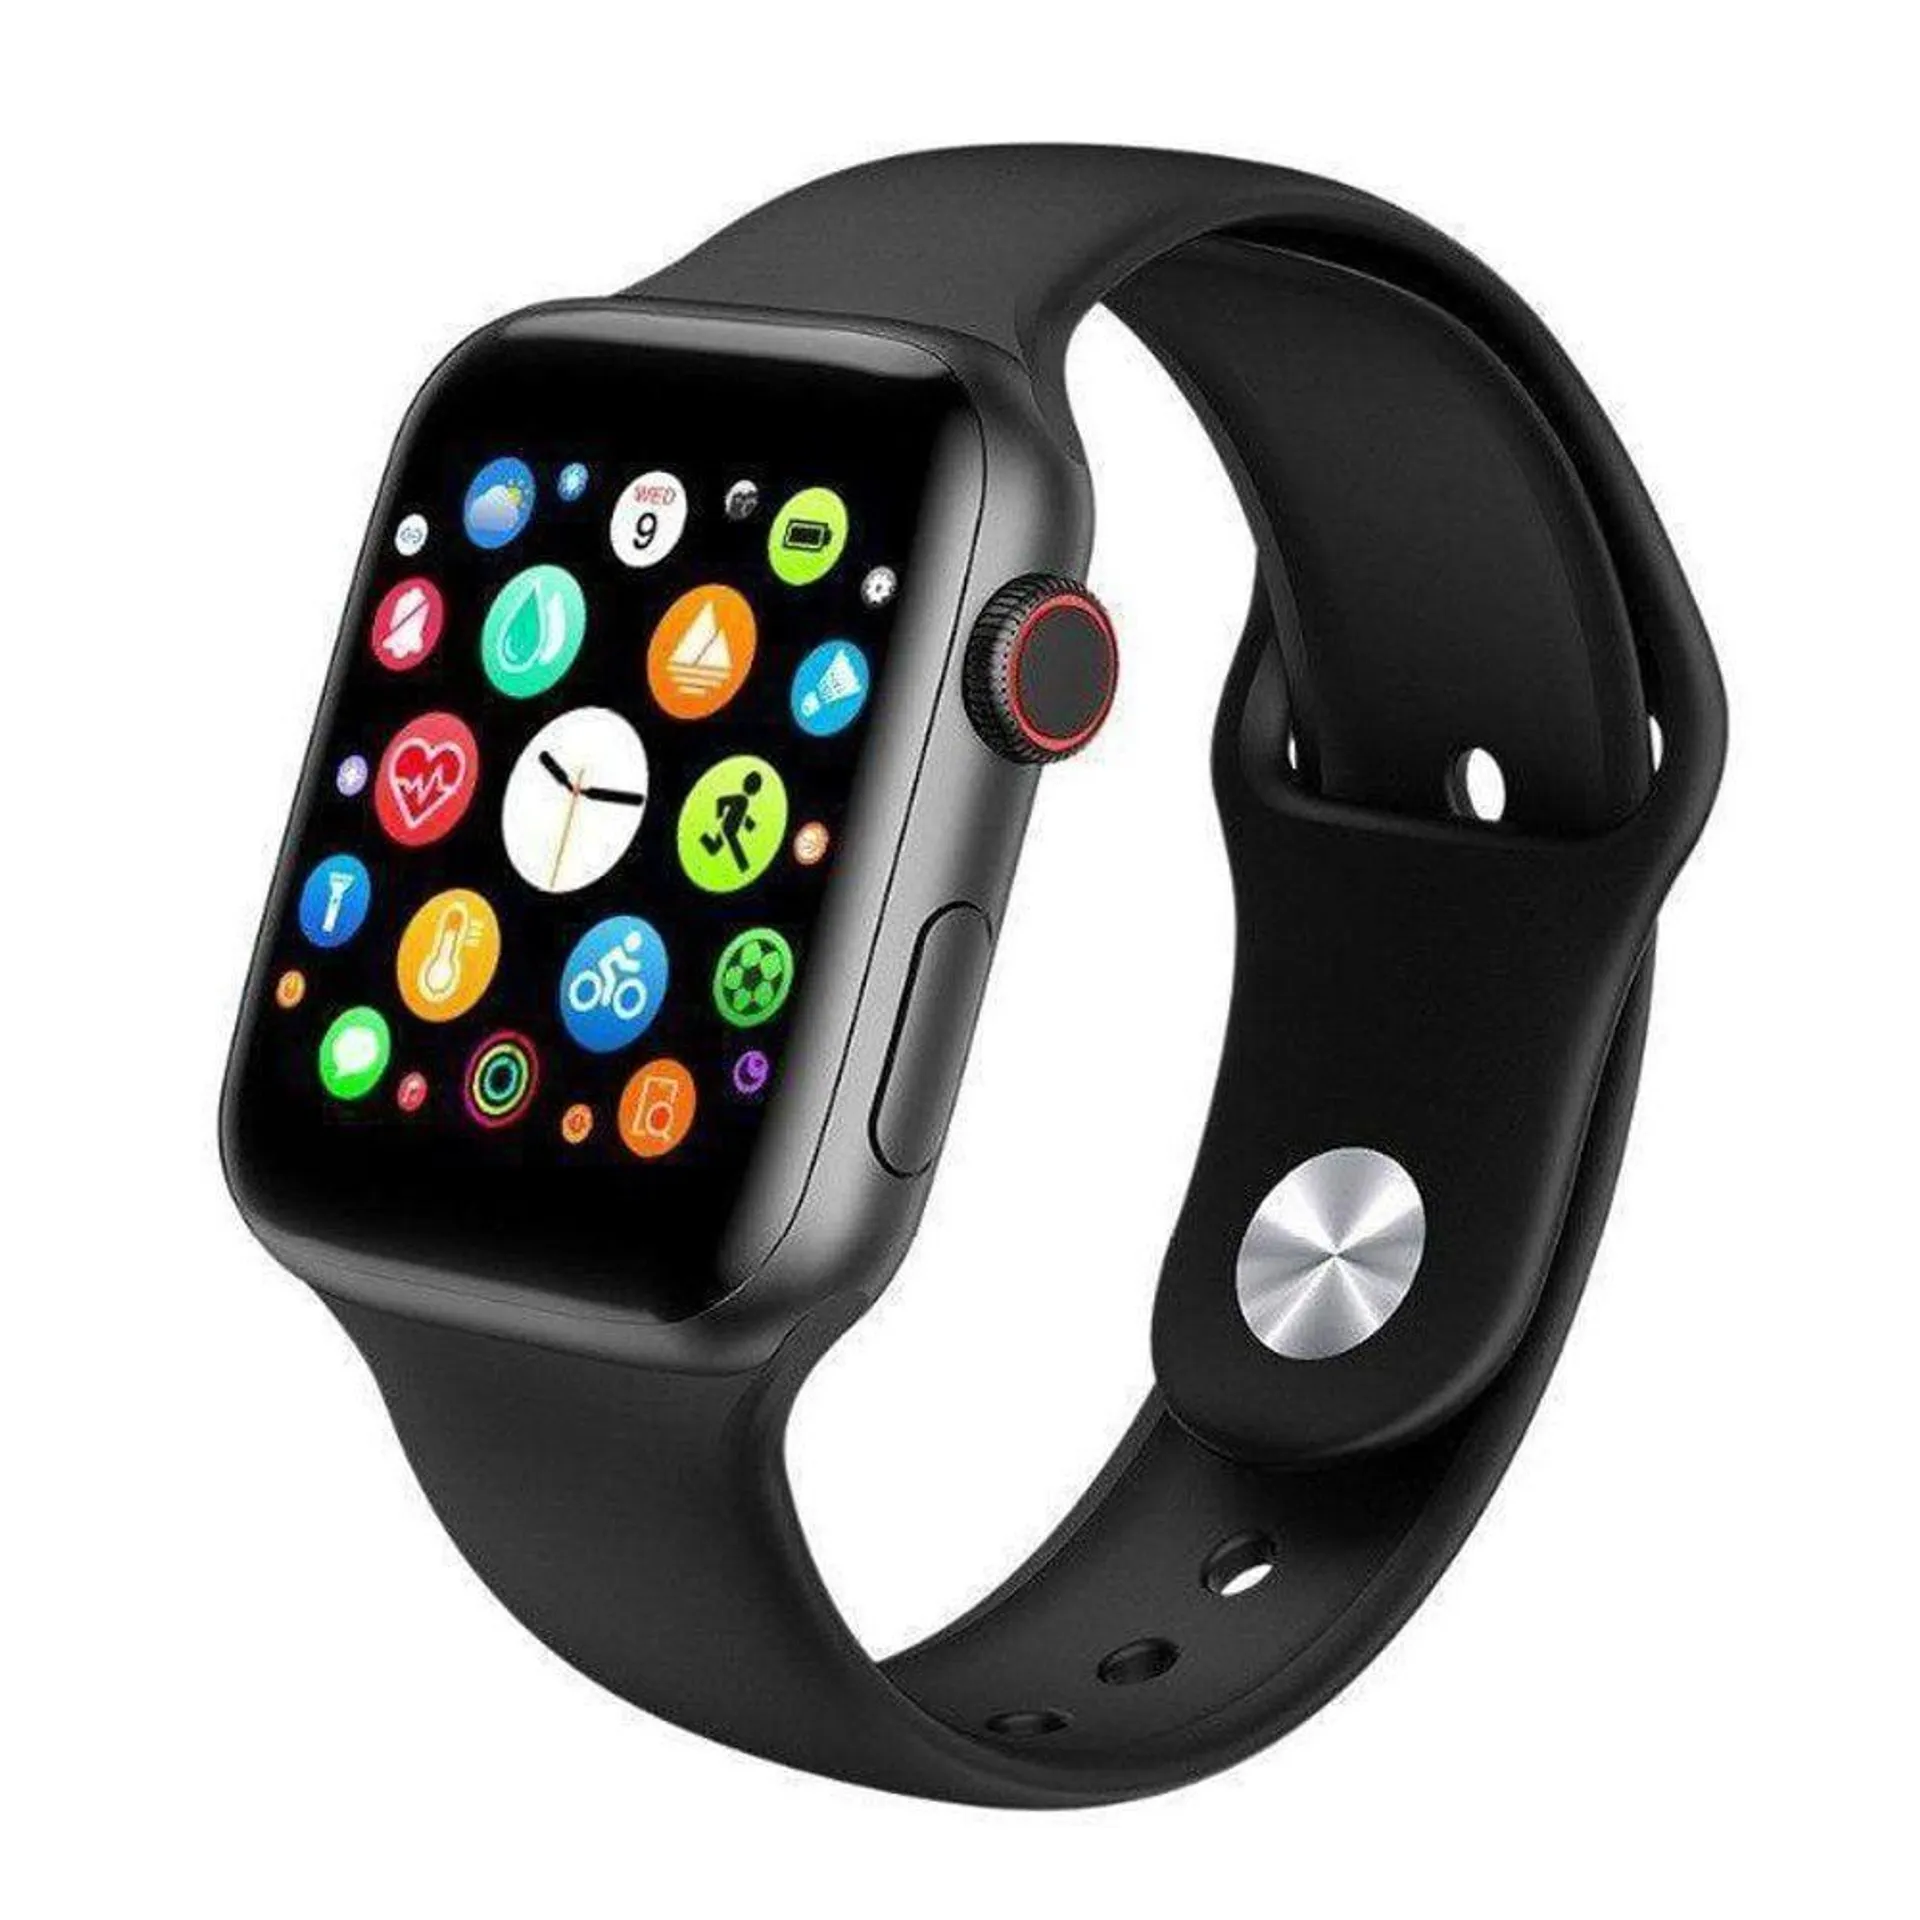 Smartwatch Inteligente W28 PRO Relógio Academia Esporte Fitness Multi-Funções Bluetooth Android iOS